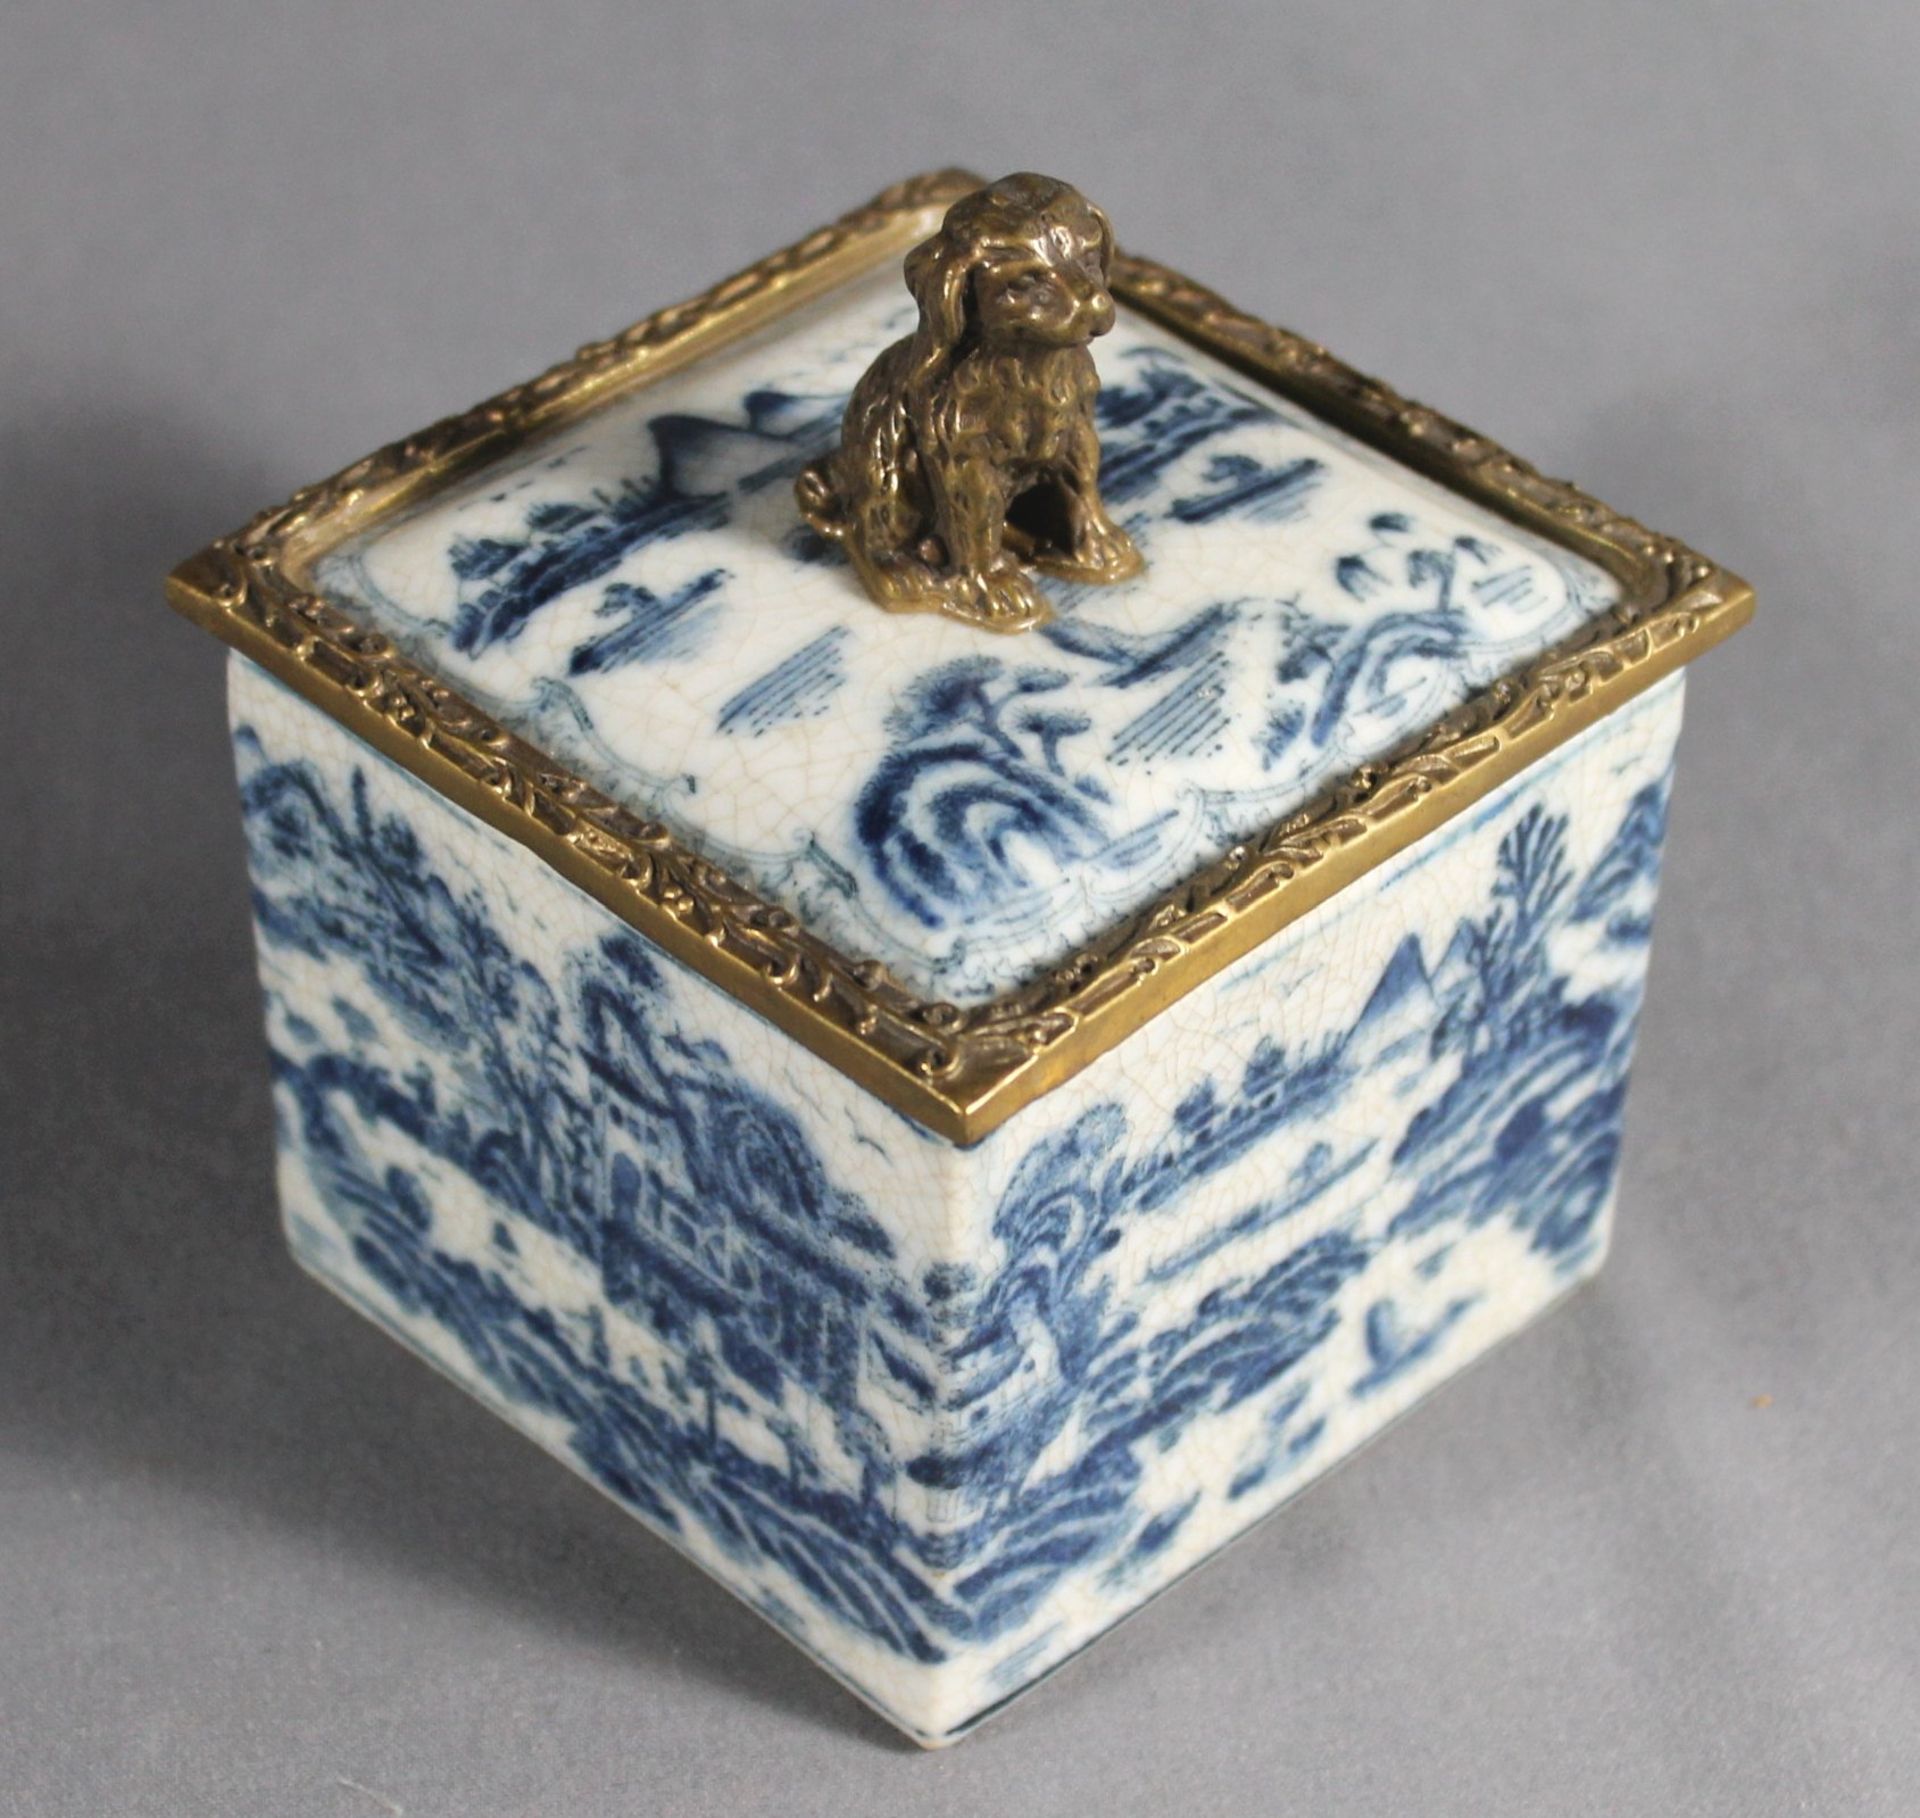 1 quadratische Deckeldose Keramik, Wandung und Deckel mit blauem Landschaftsdekor, Deckel in Messing - Image 2 of 3